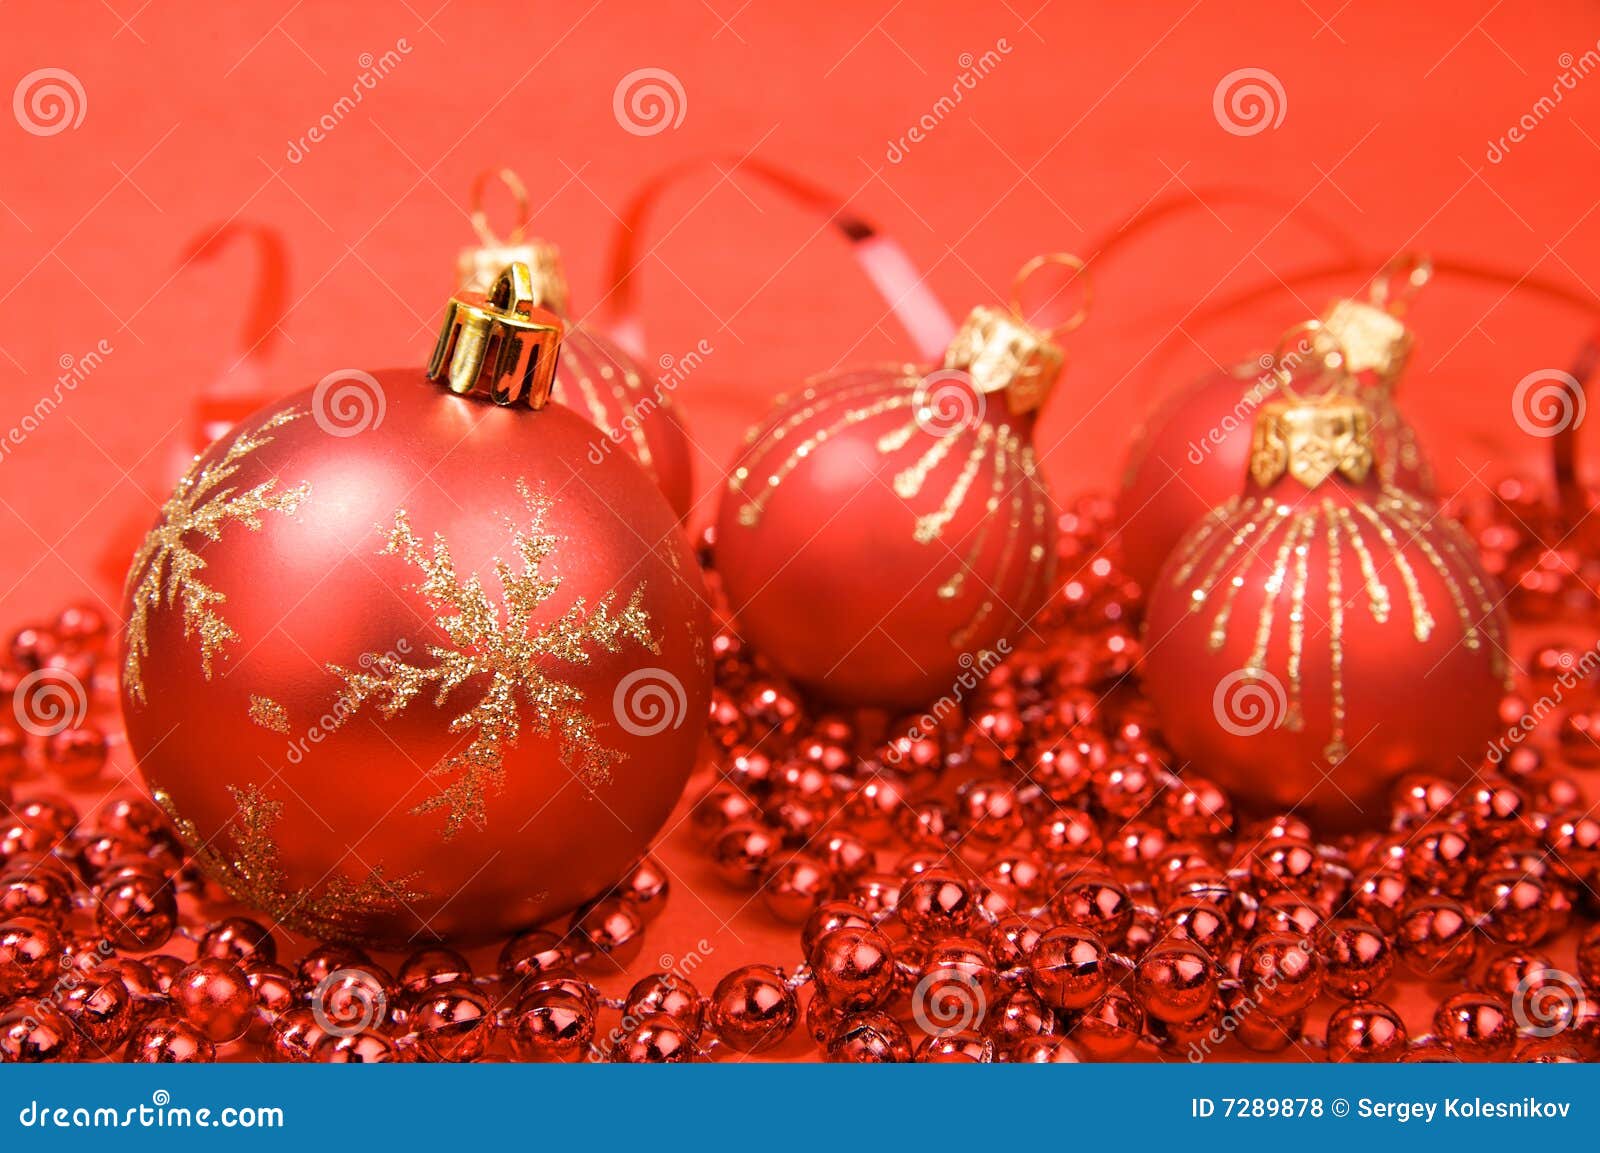 Red christmas balls stock photo. Image of sphere, equipment - 7289878